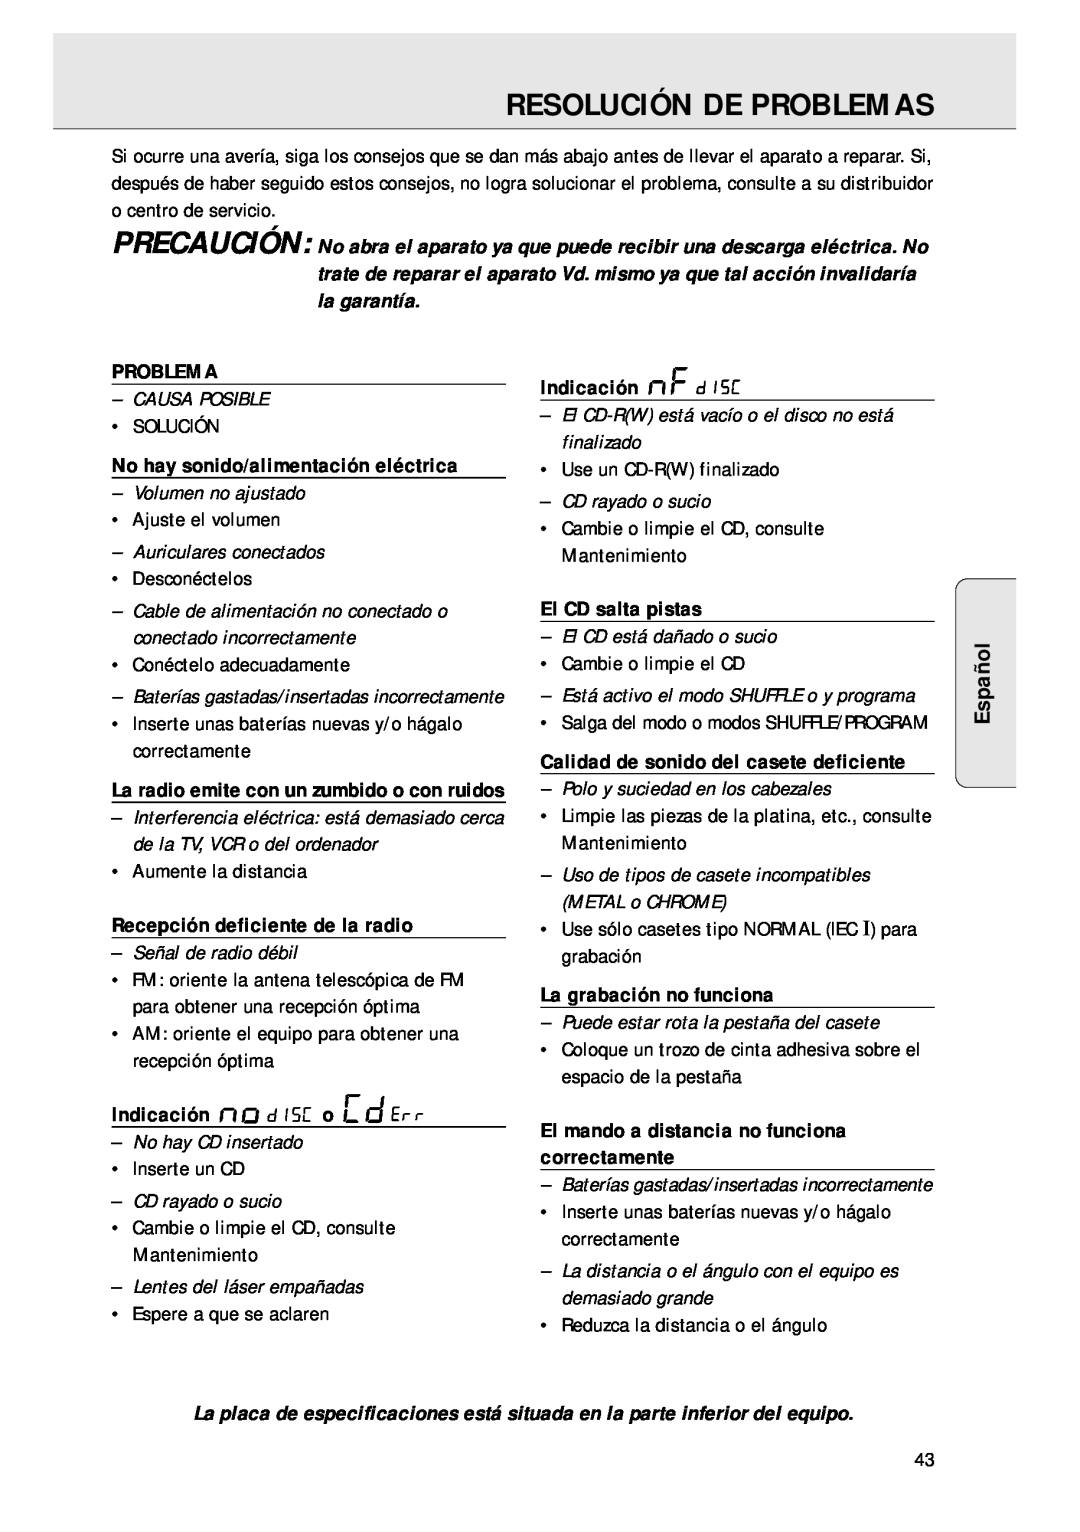 Magnavox AZ 1045 manual Resolución De Problemas, Español, Causa Posible, No hay sonido/alimentación eléctrica, Indicación 